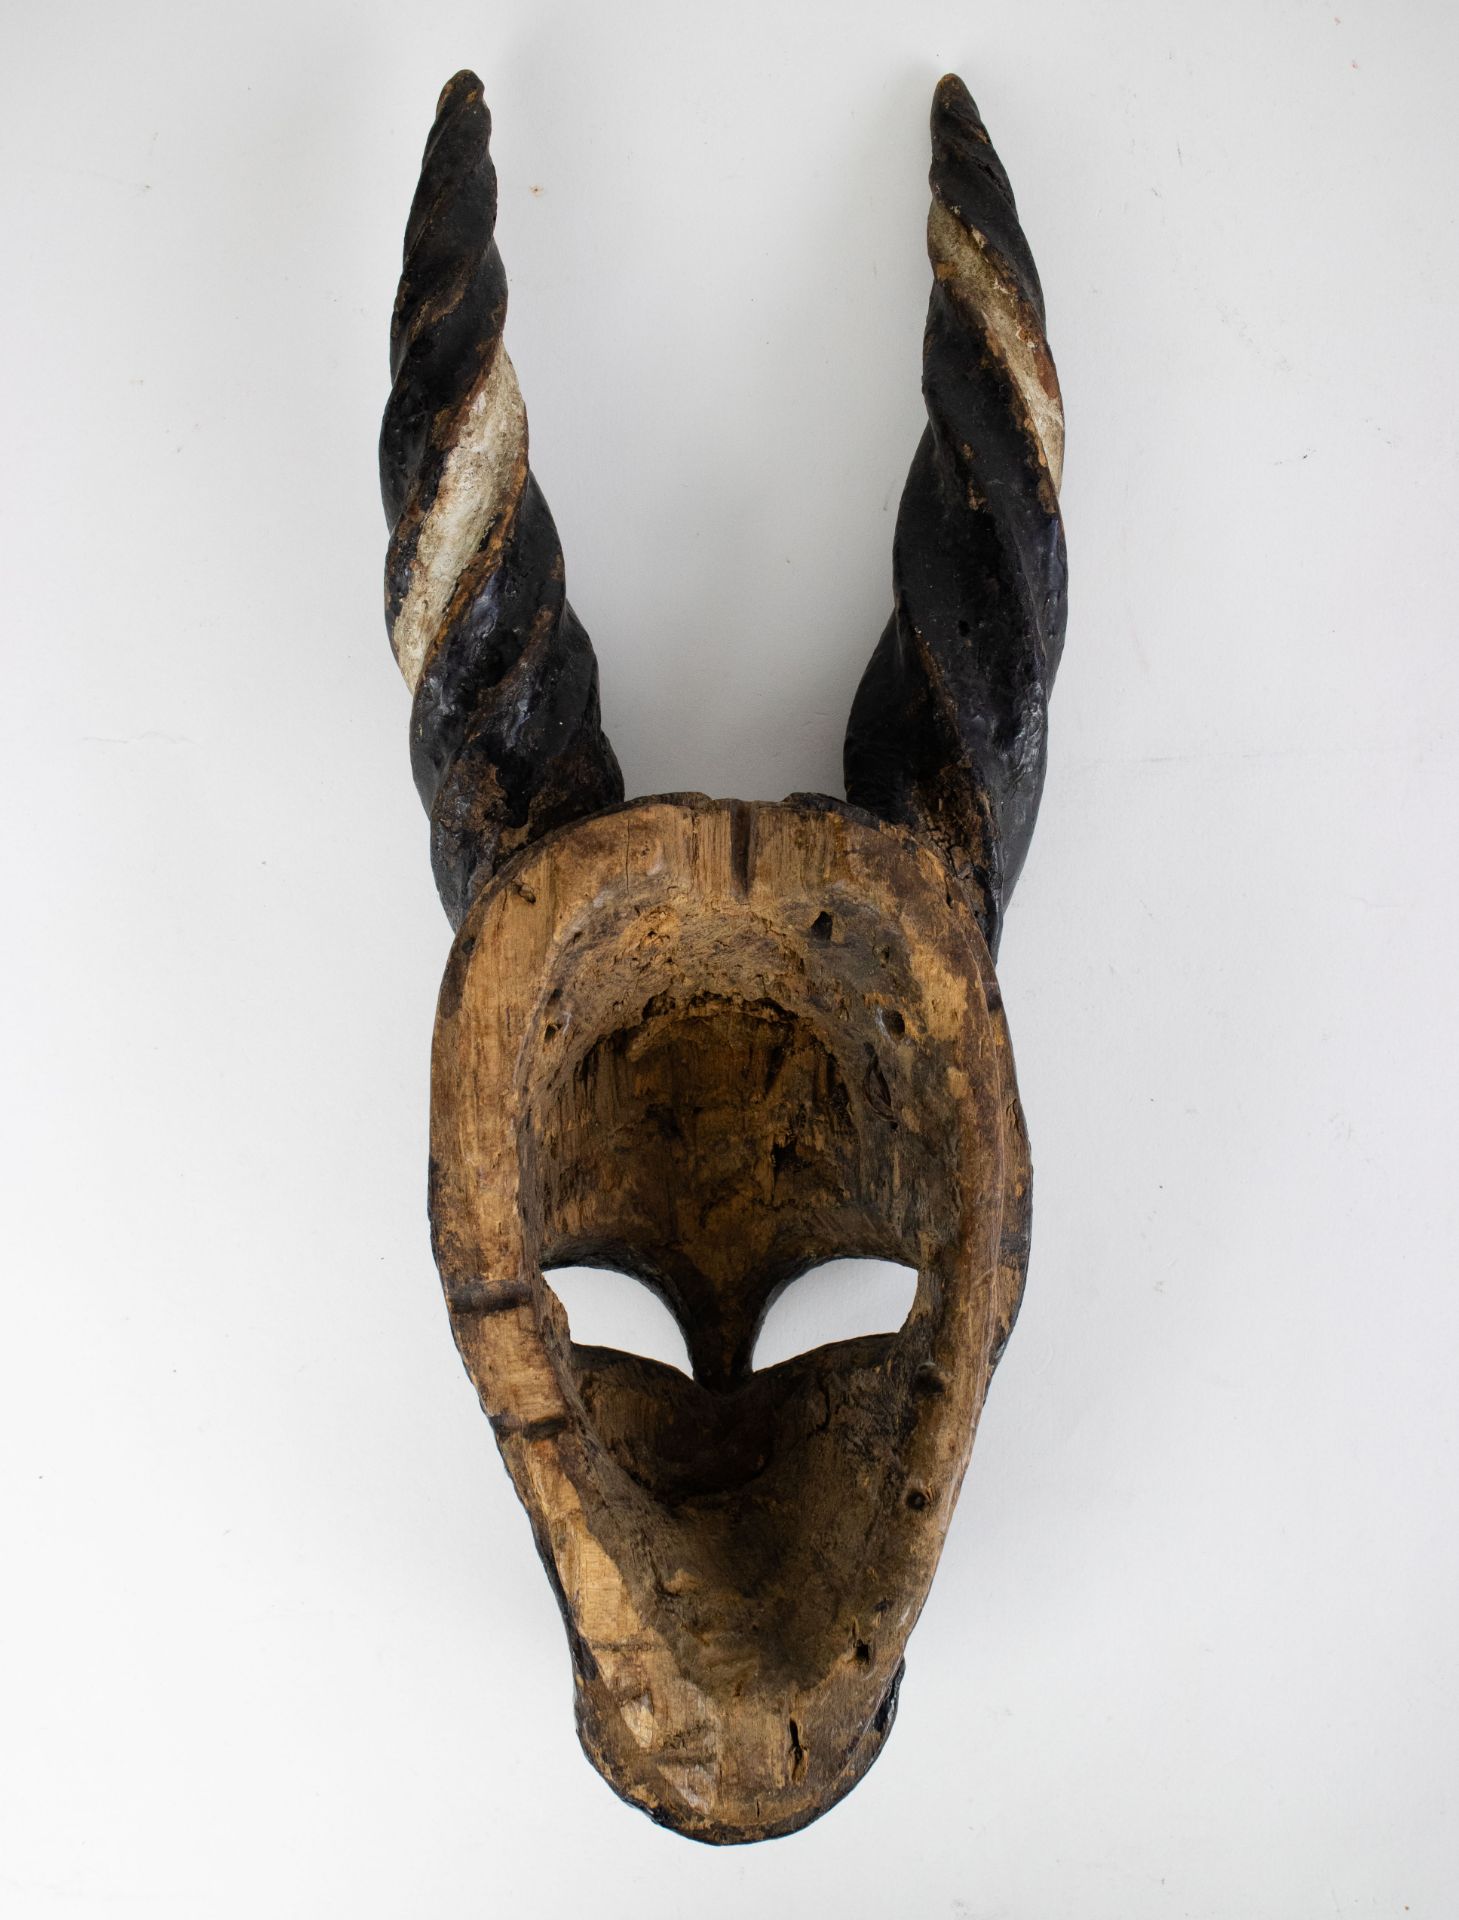 Ibibio mask (Nigeria) - Image 2 of 4